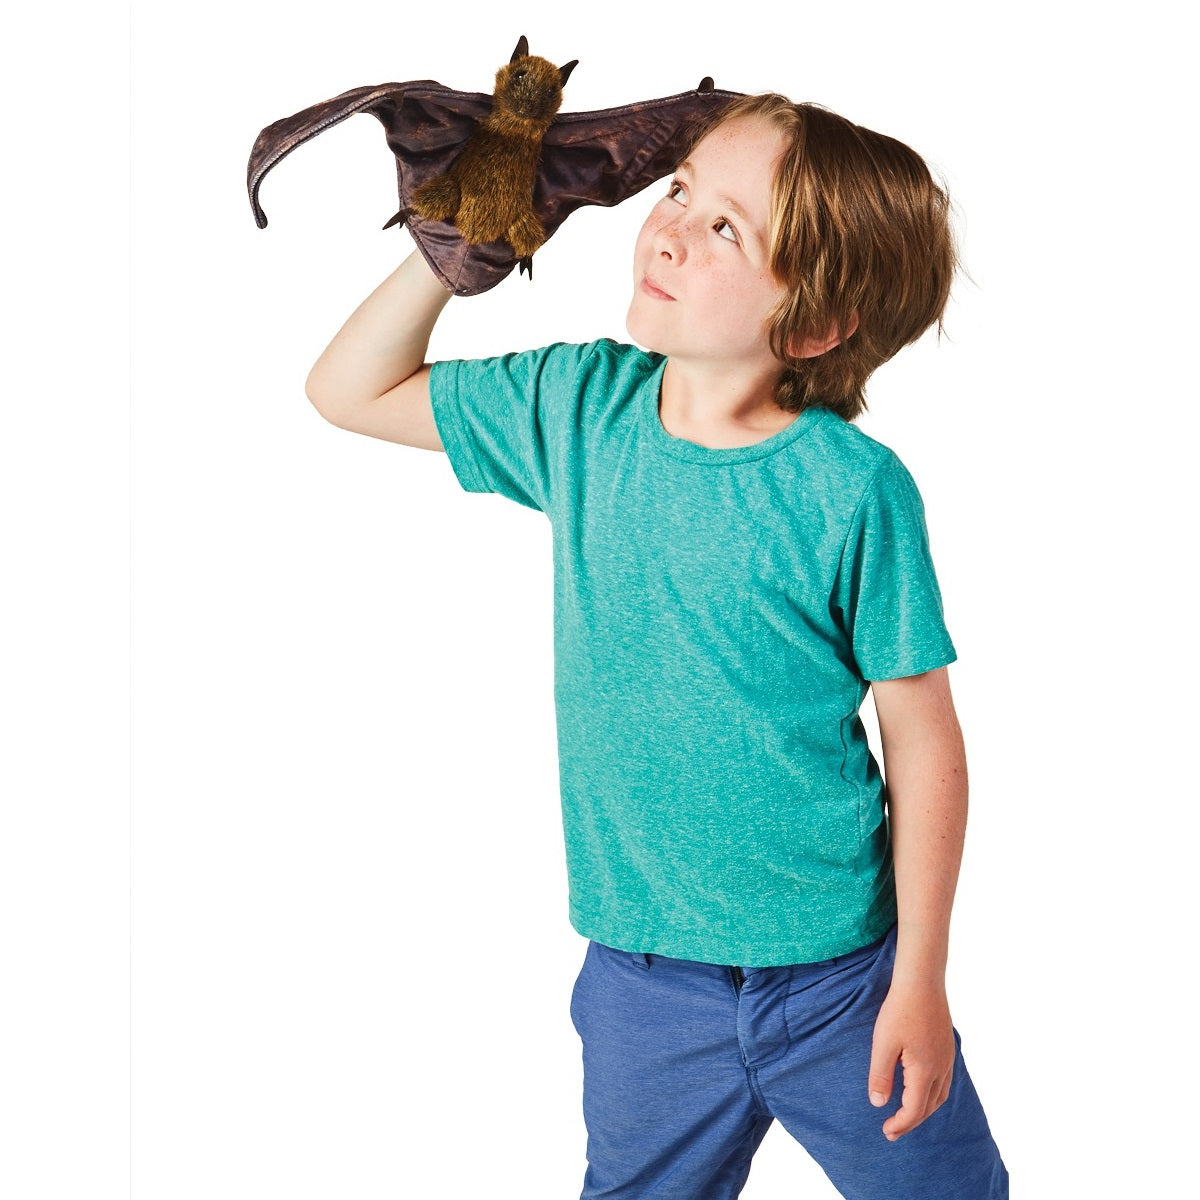 Fruit Bat Puppet